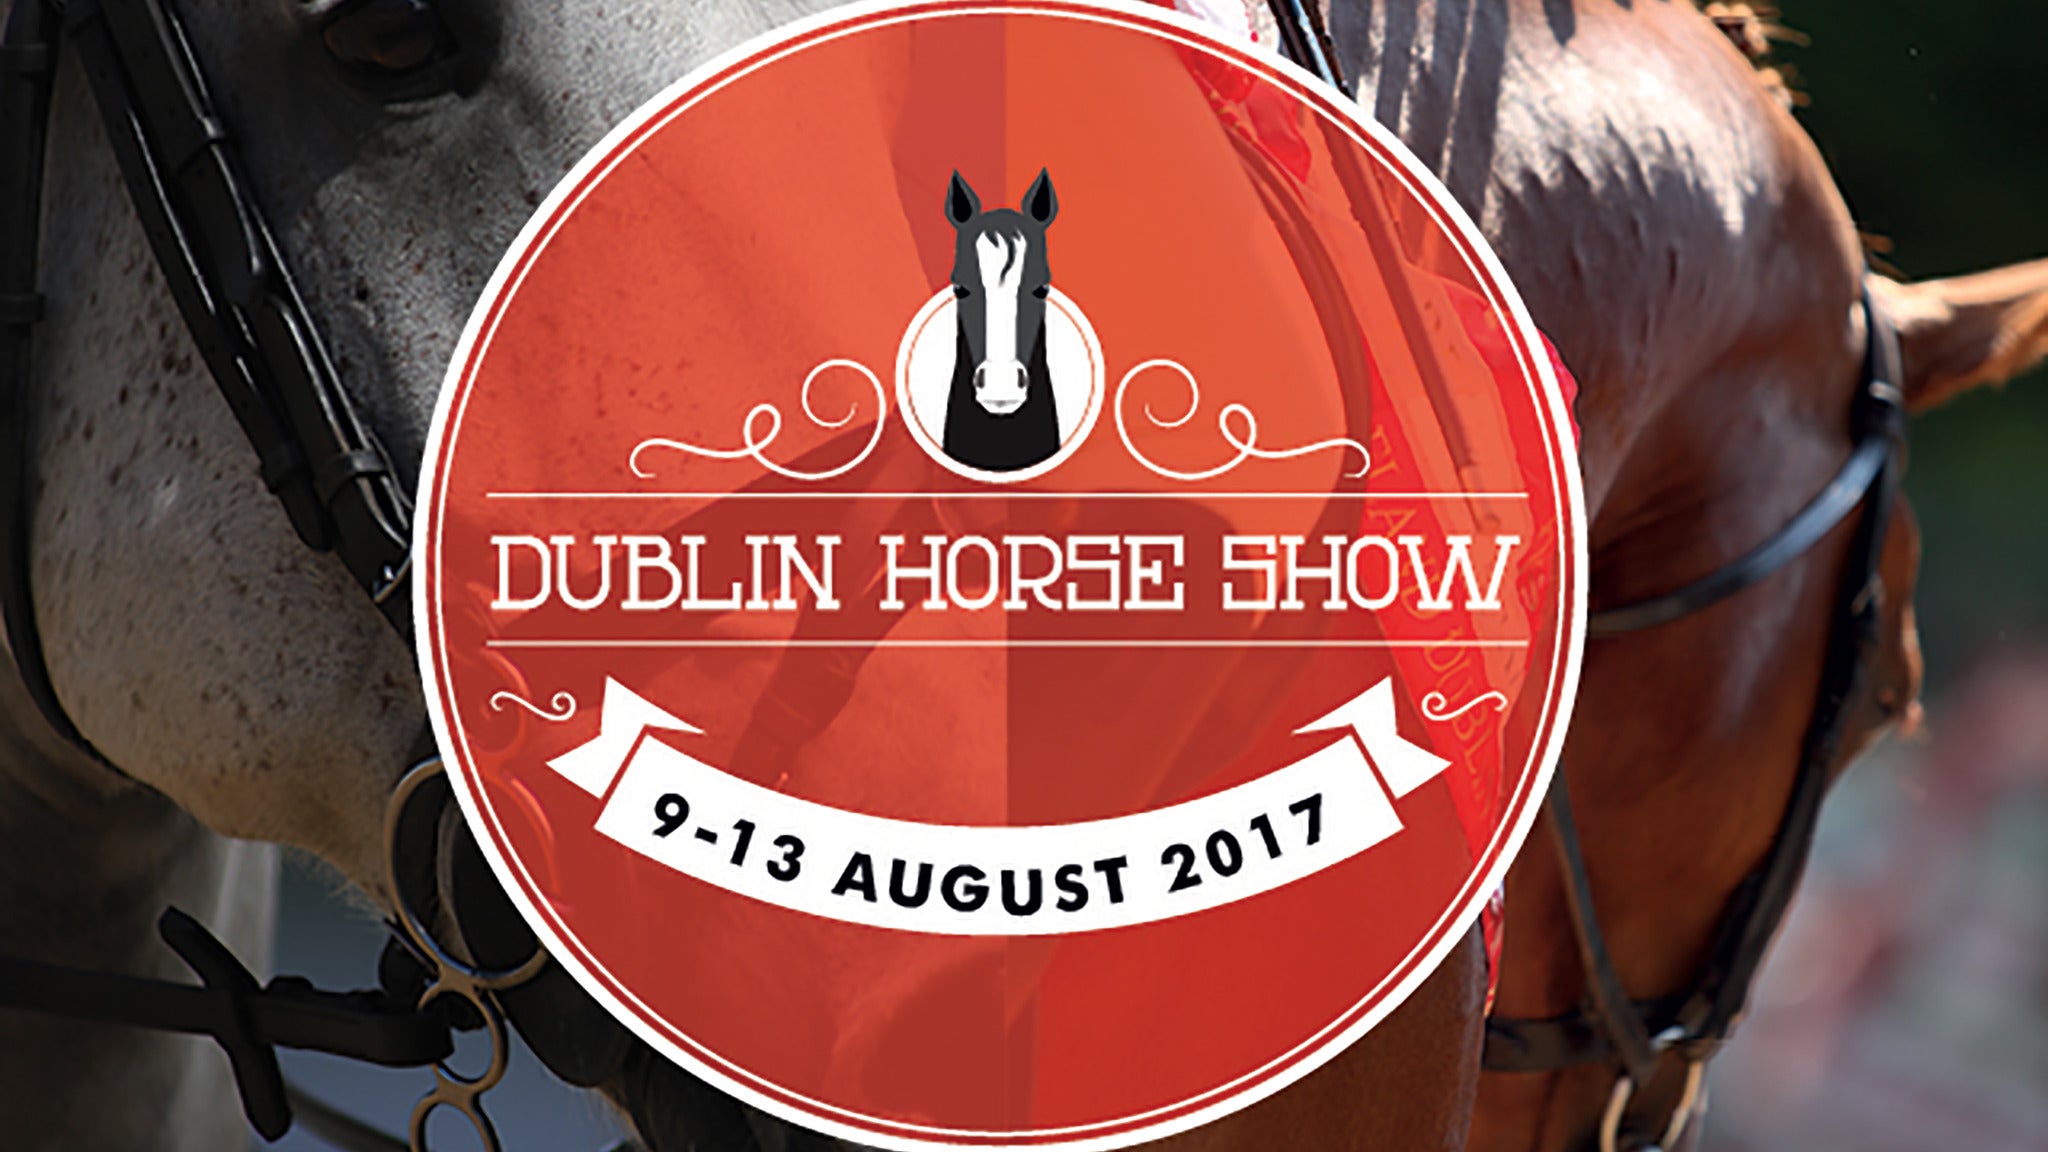 Dublin Horse Show Tickets Single Game Tickets & Schedule